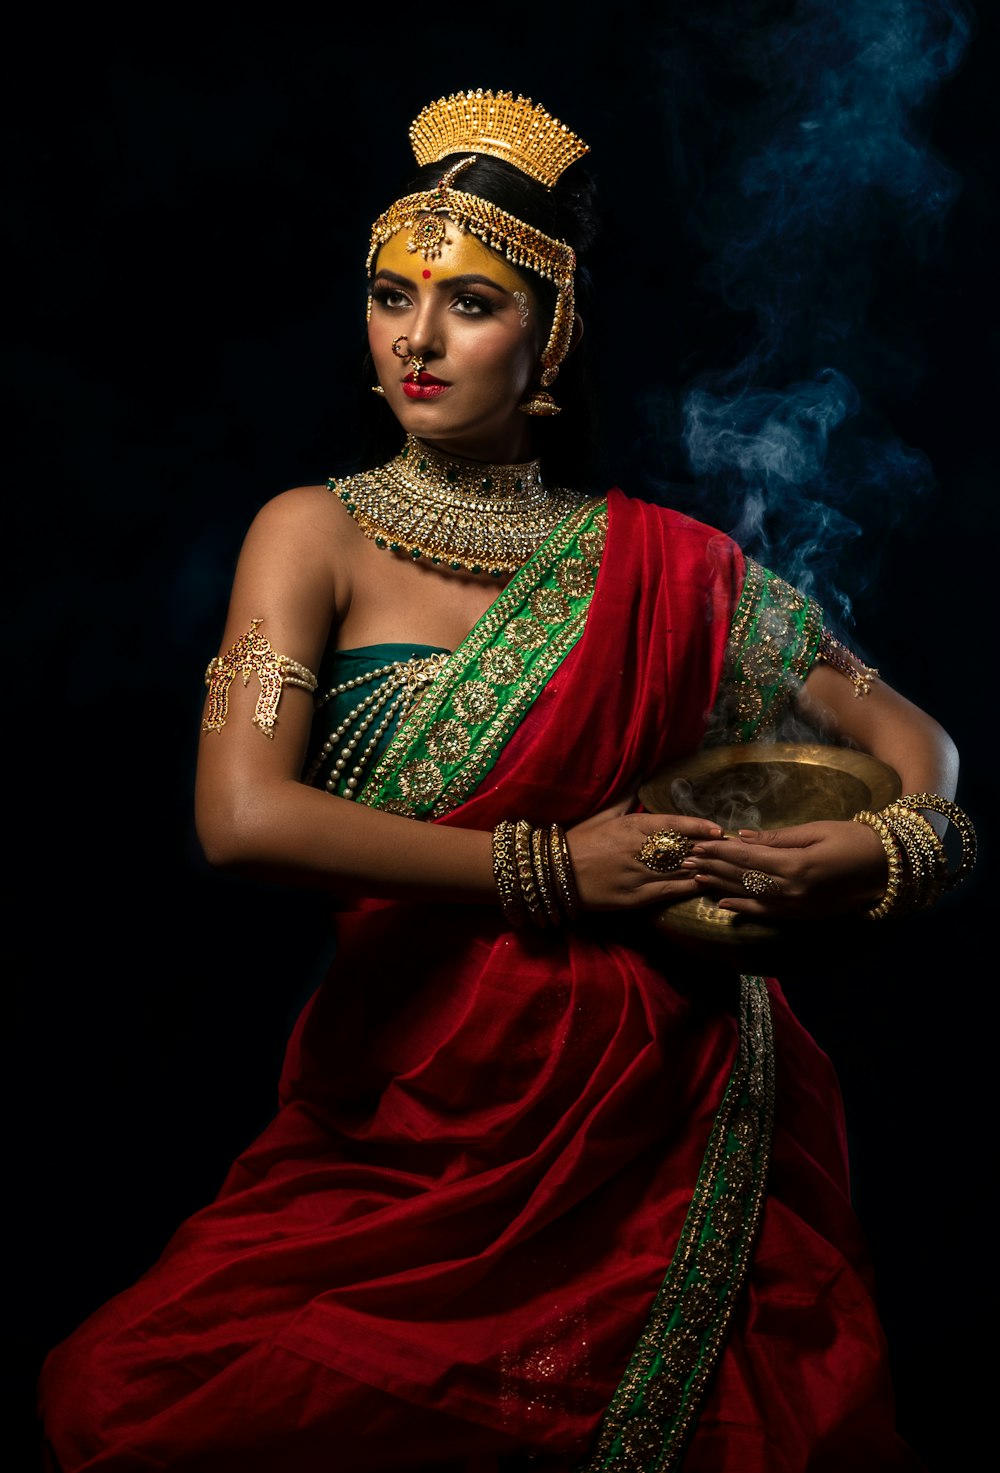 Femme en robe sari rouge et verte